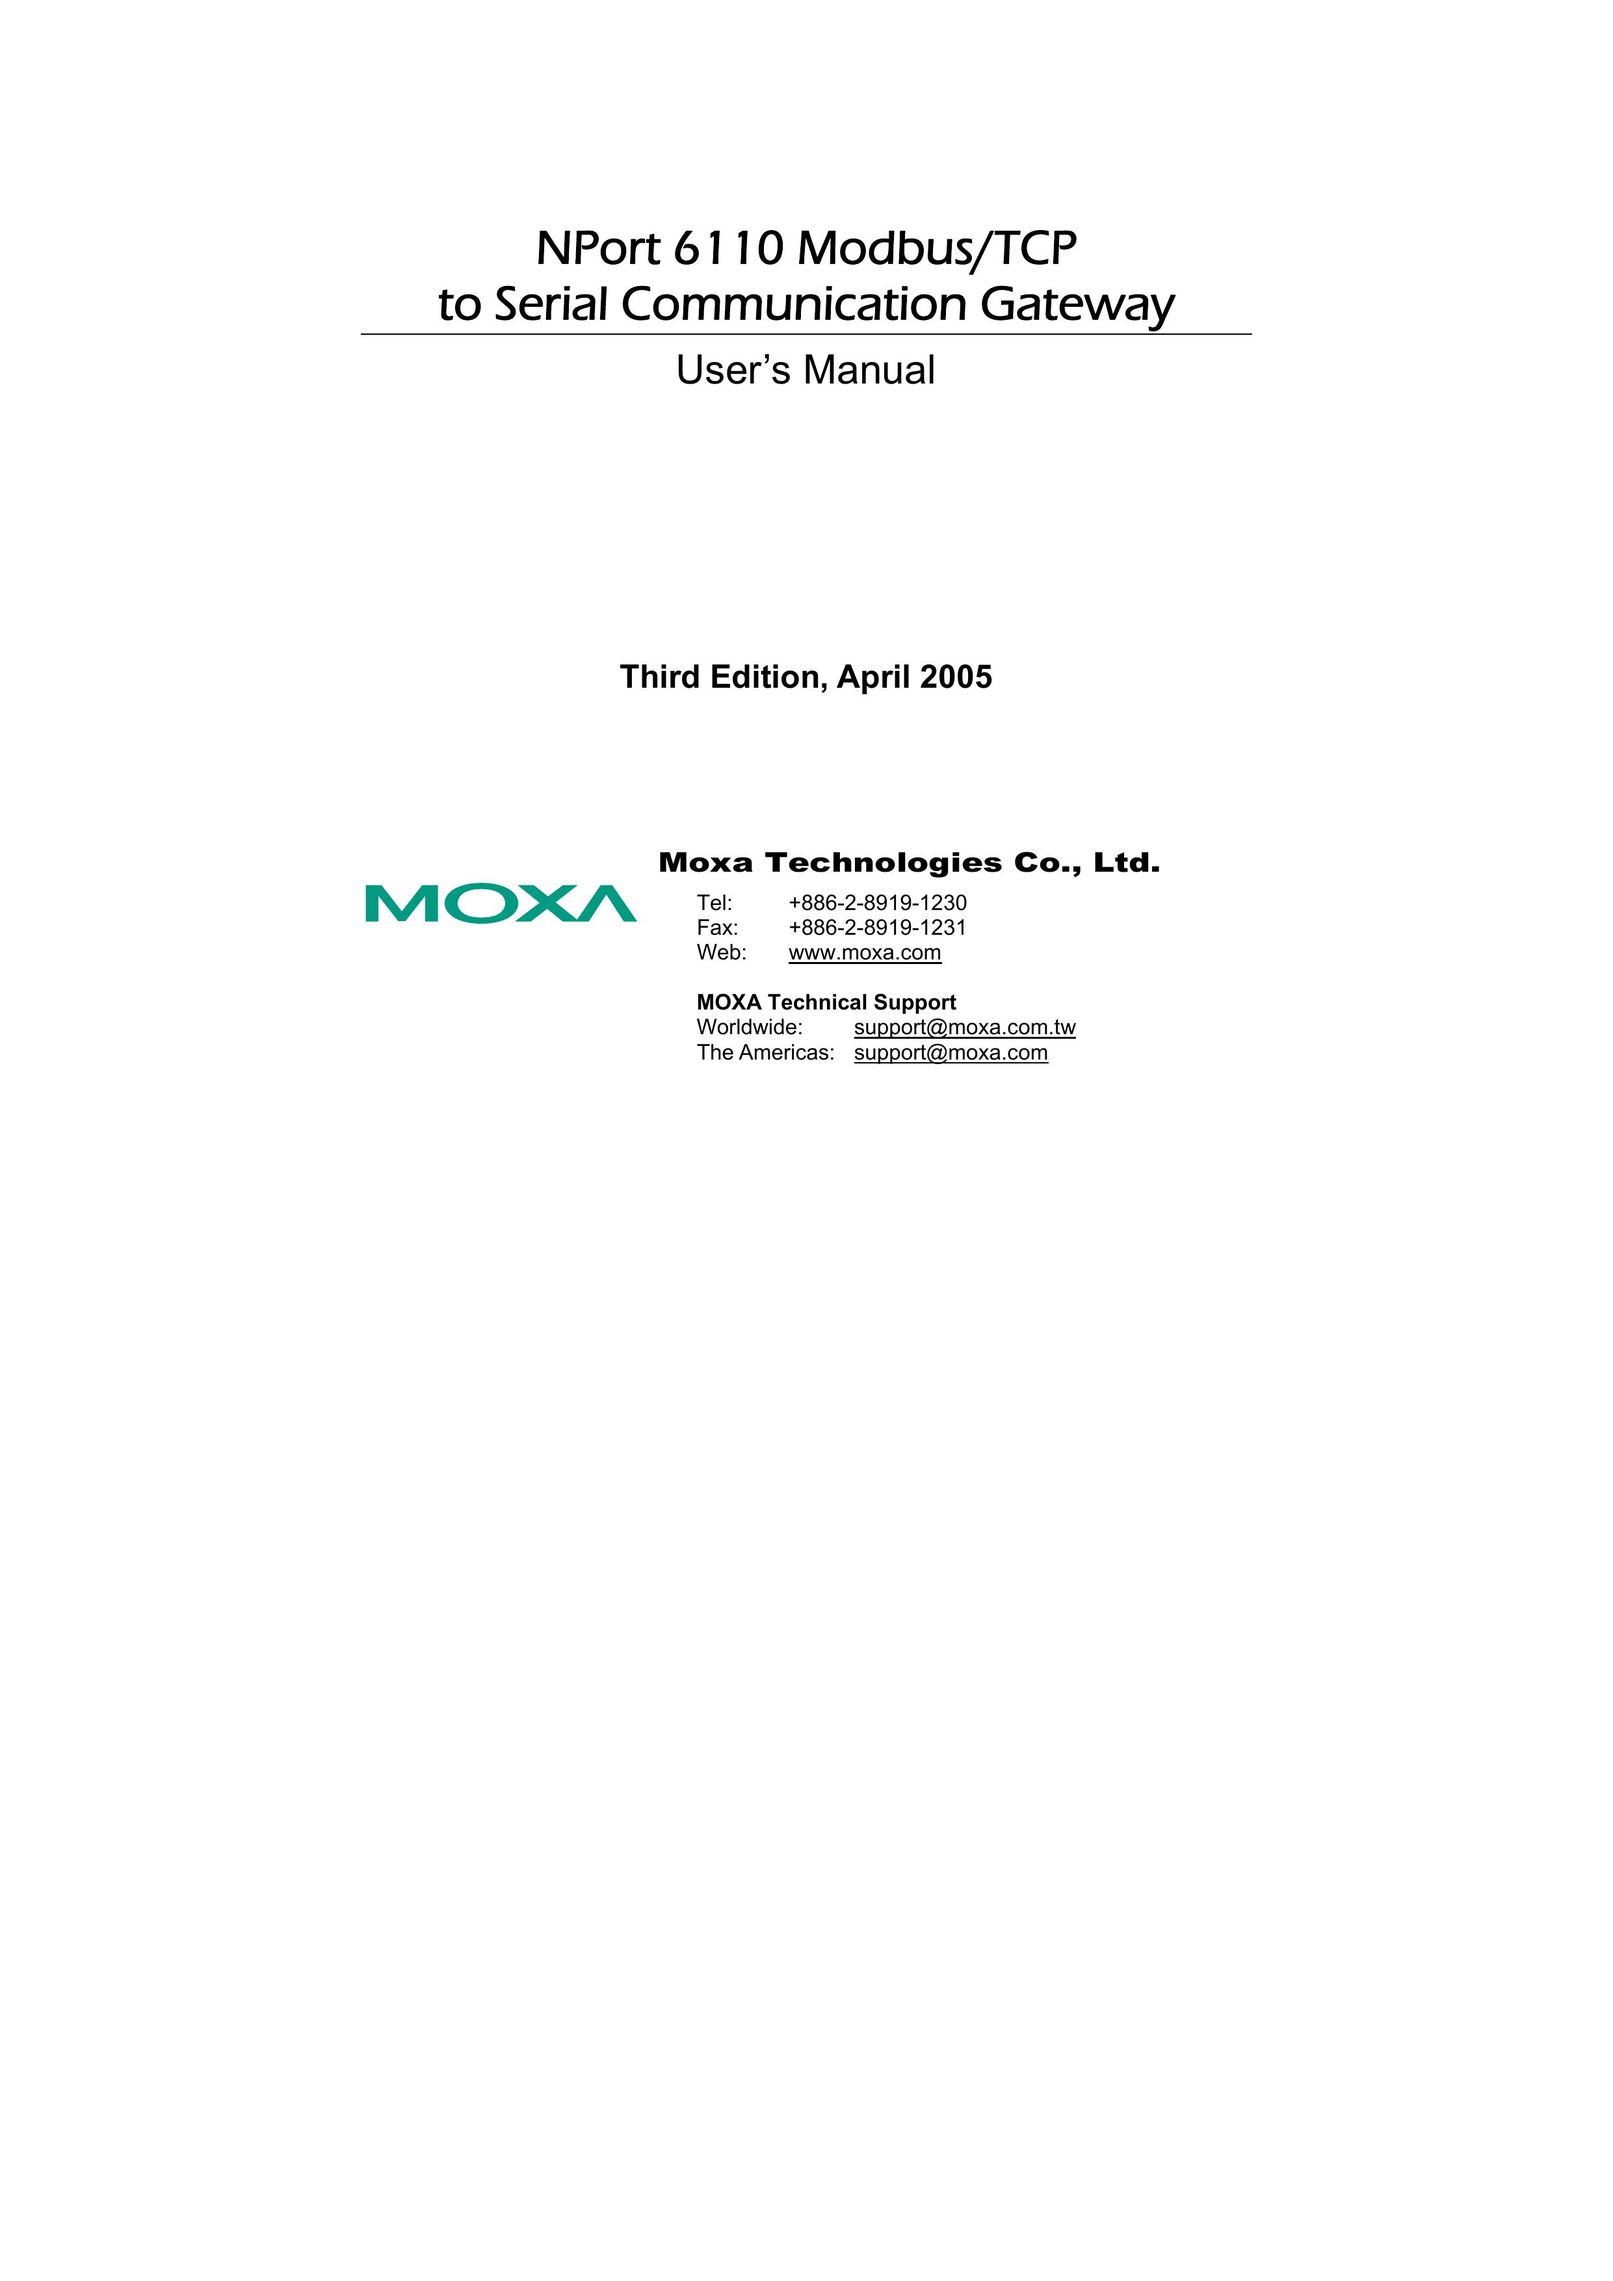 Moxa Technologies NPort 6110 Switch User Manual